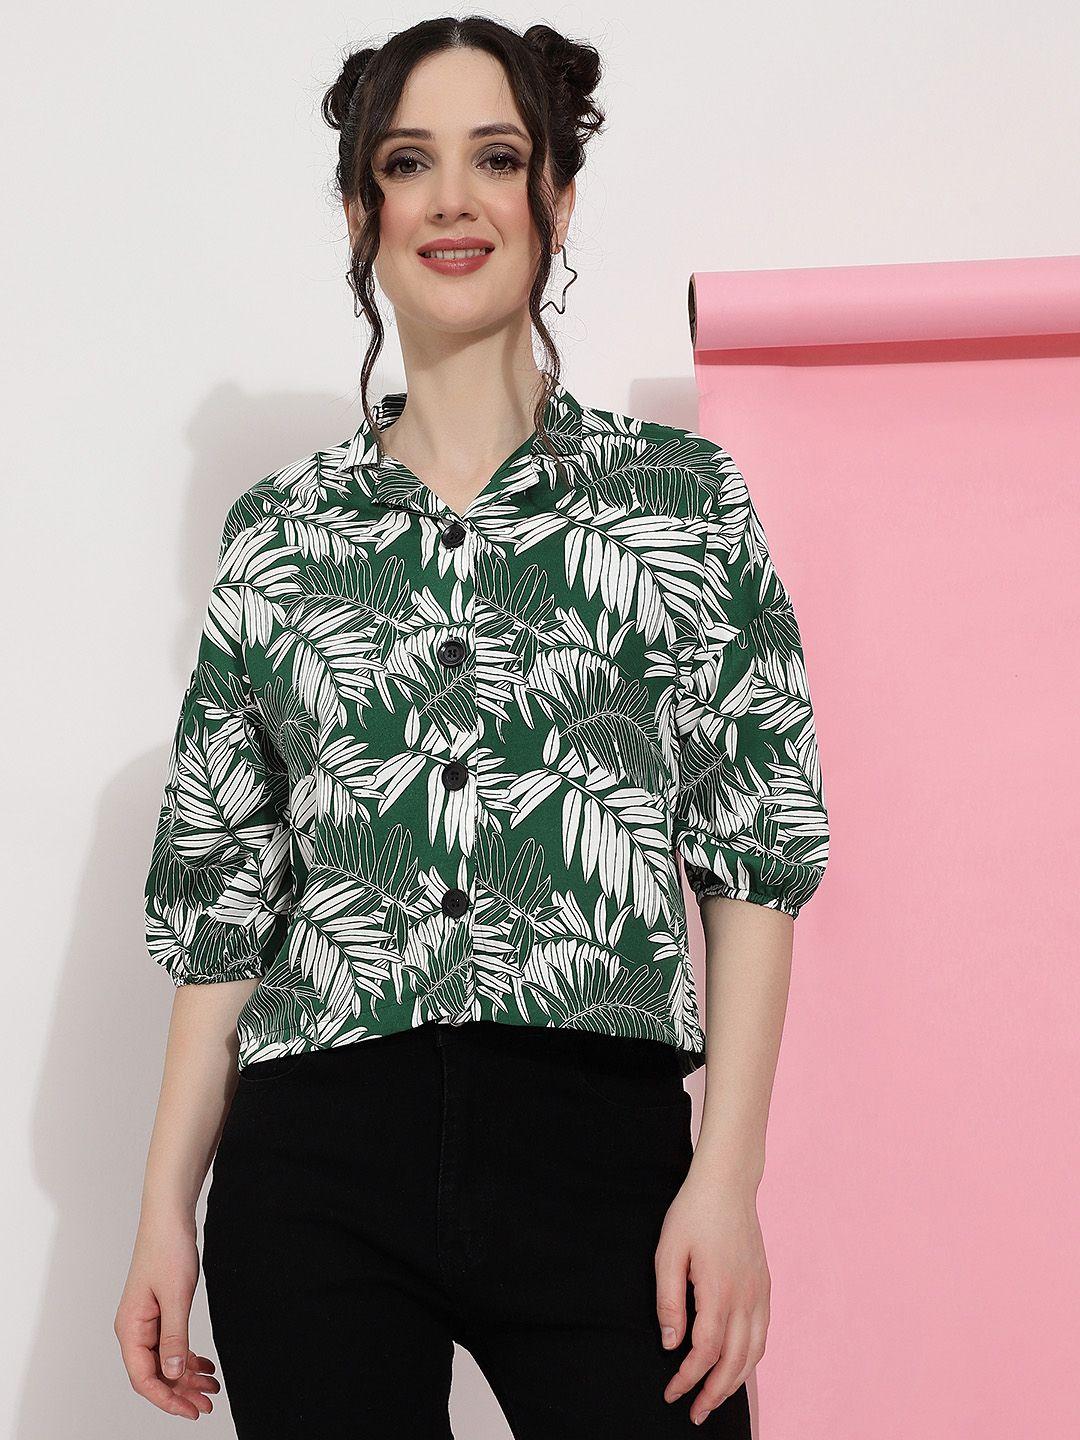 fashionseye tropical printed shirt collar three-quarter sleeves crepe shirt style top